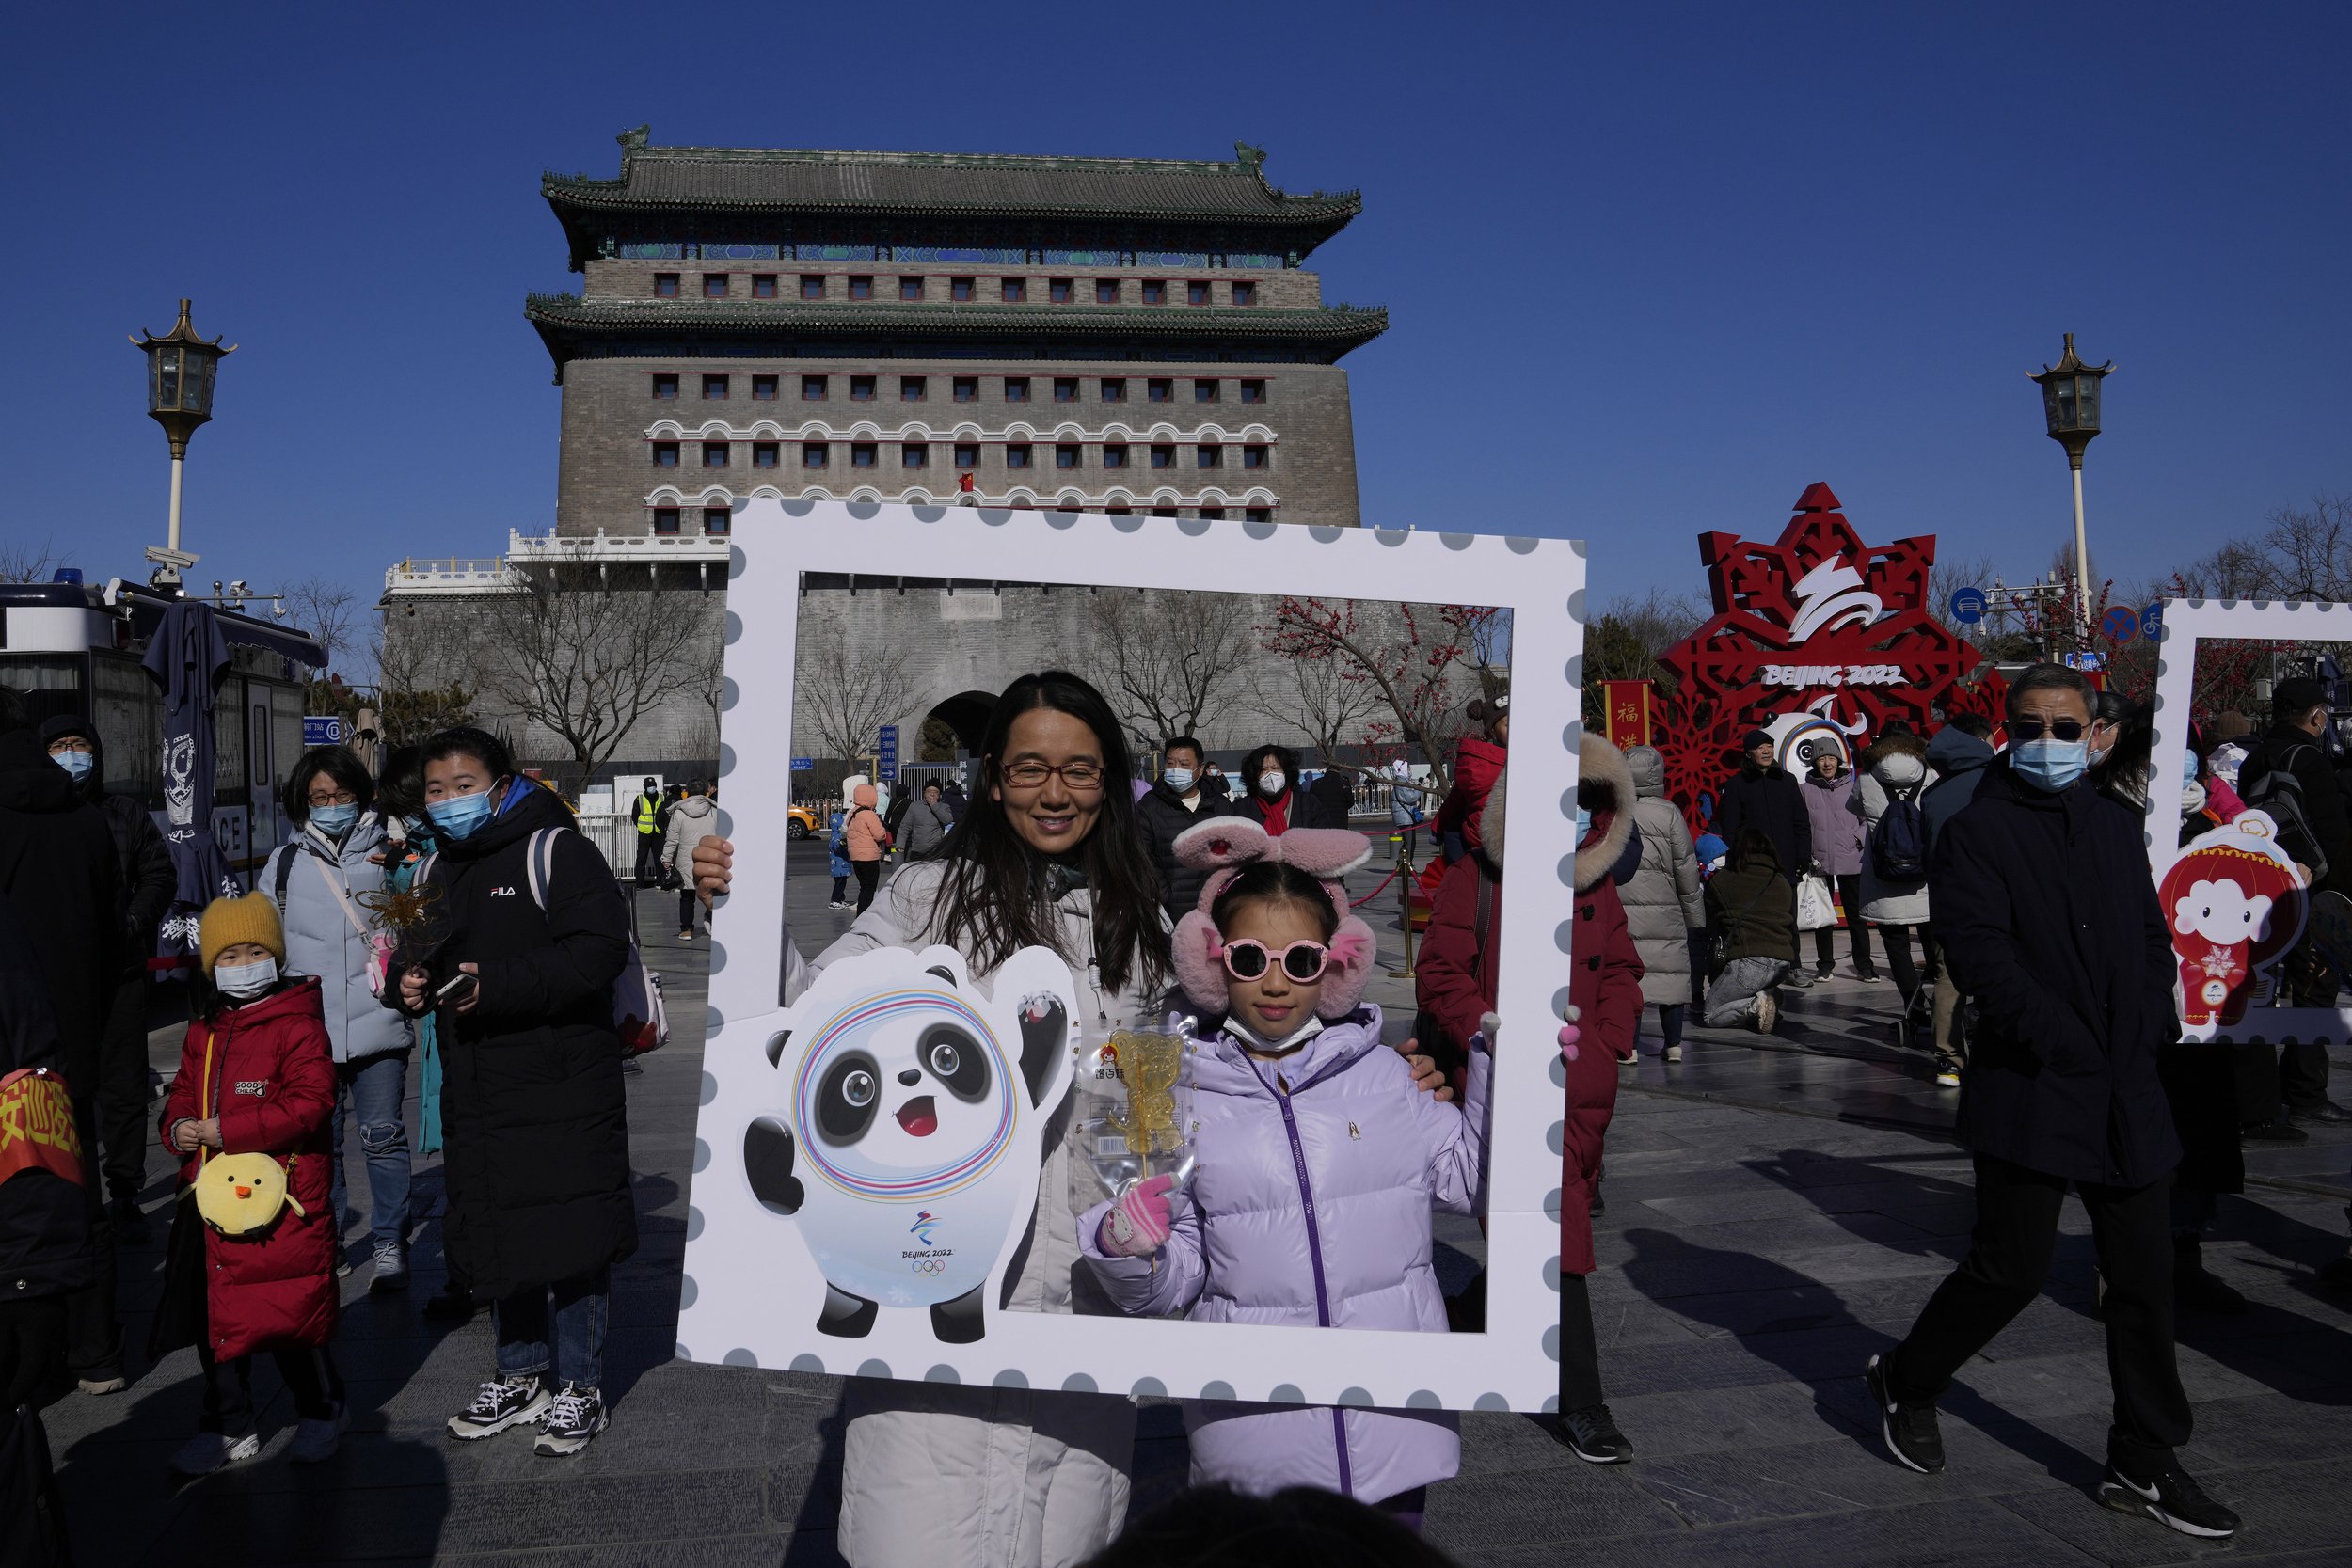  Residents pose for photos with a cutout showing the Olympic mascot Bing Dwen Dwen at a popular retail street in Beijing, China, Friday, Feb. 4, 2022. (AP Photo/Ng Han Guan) 